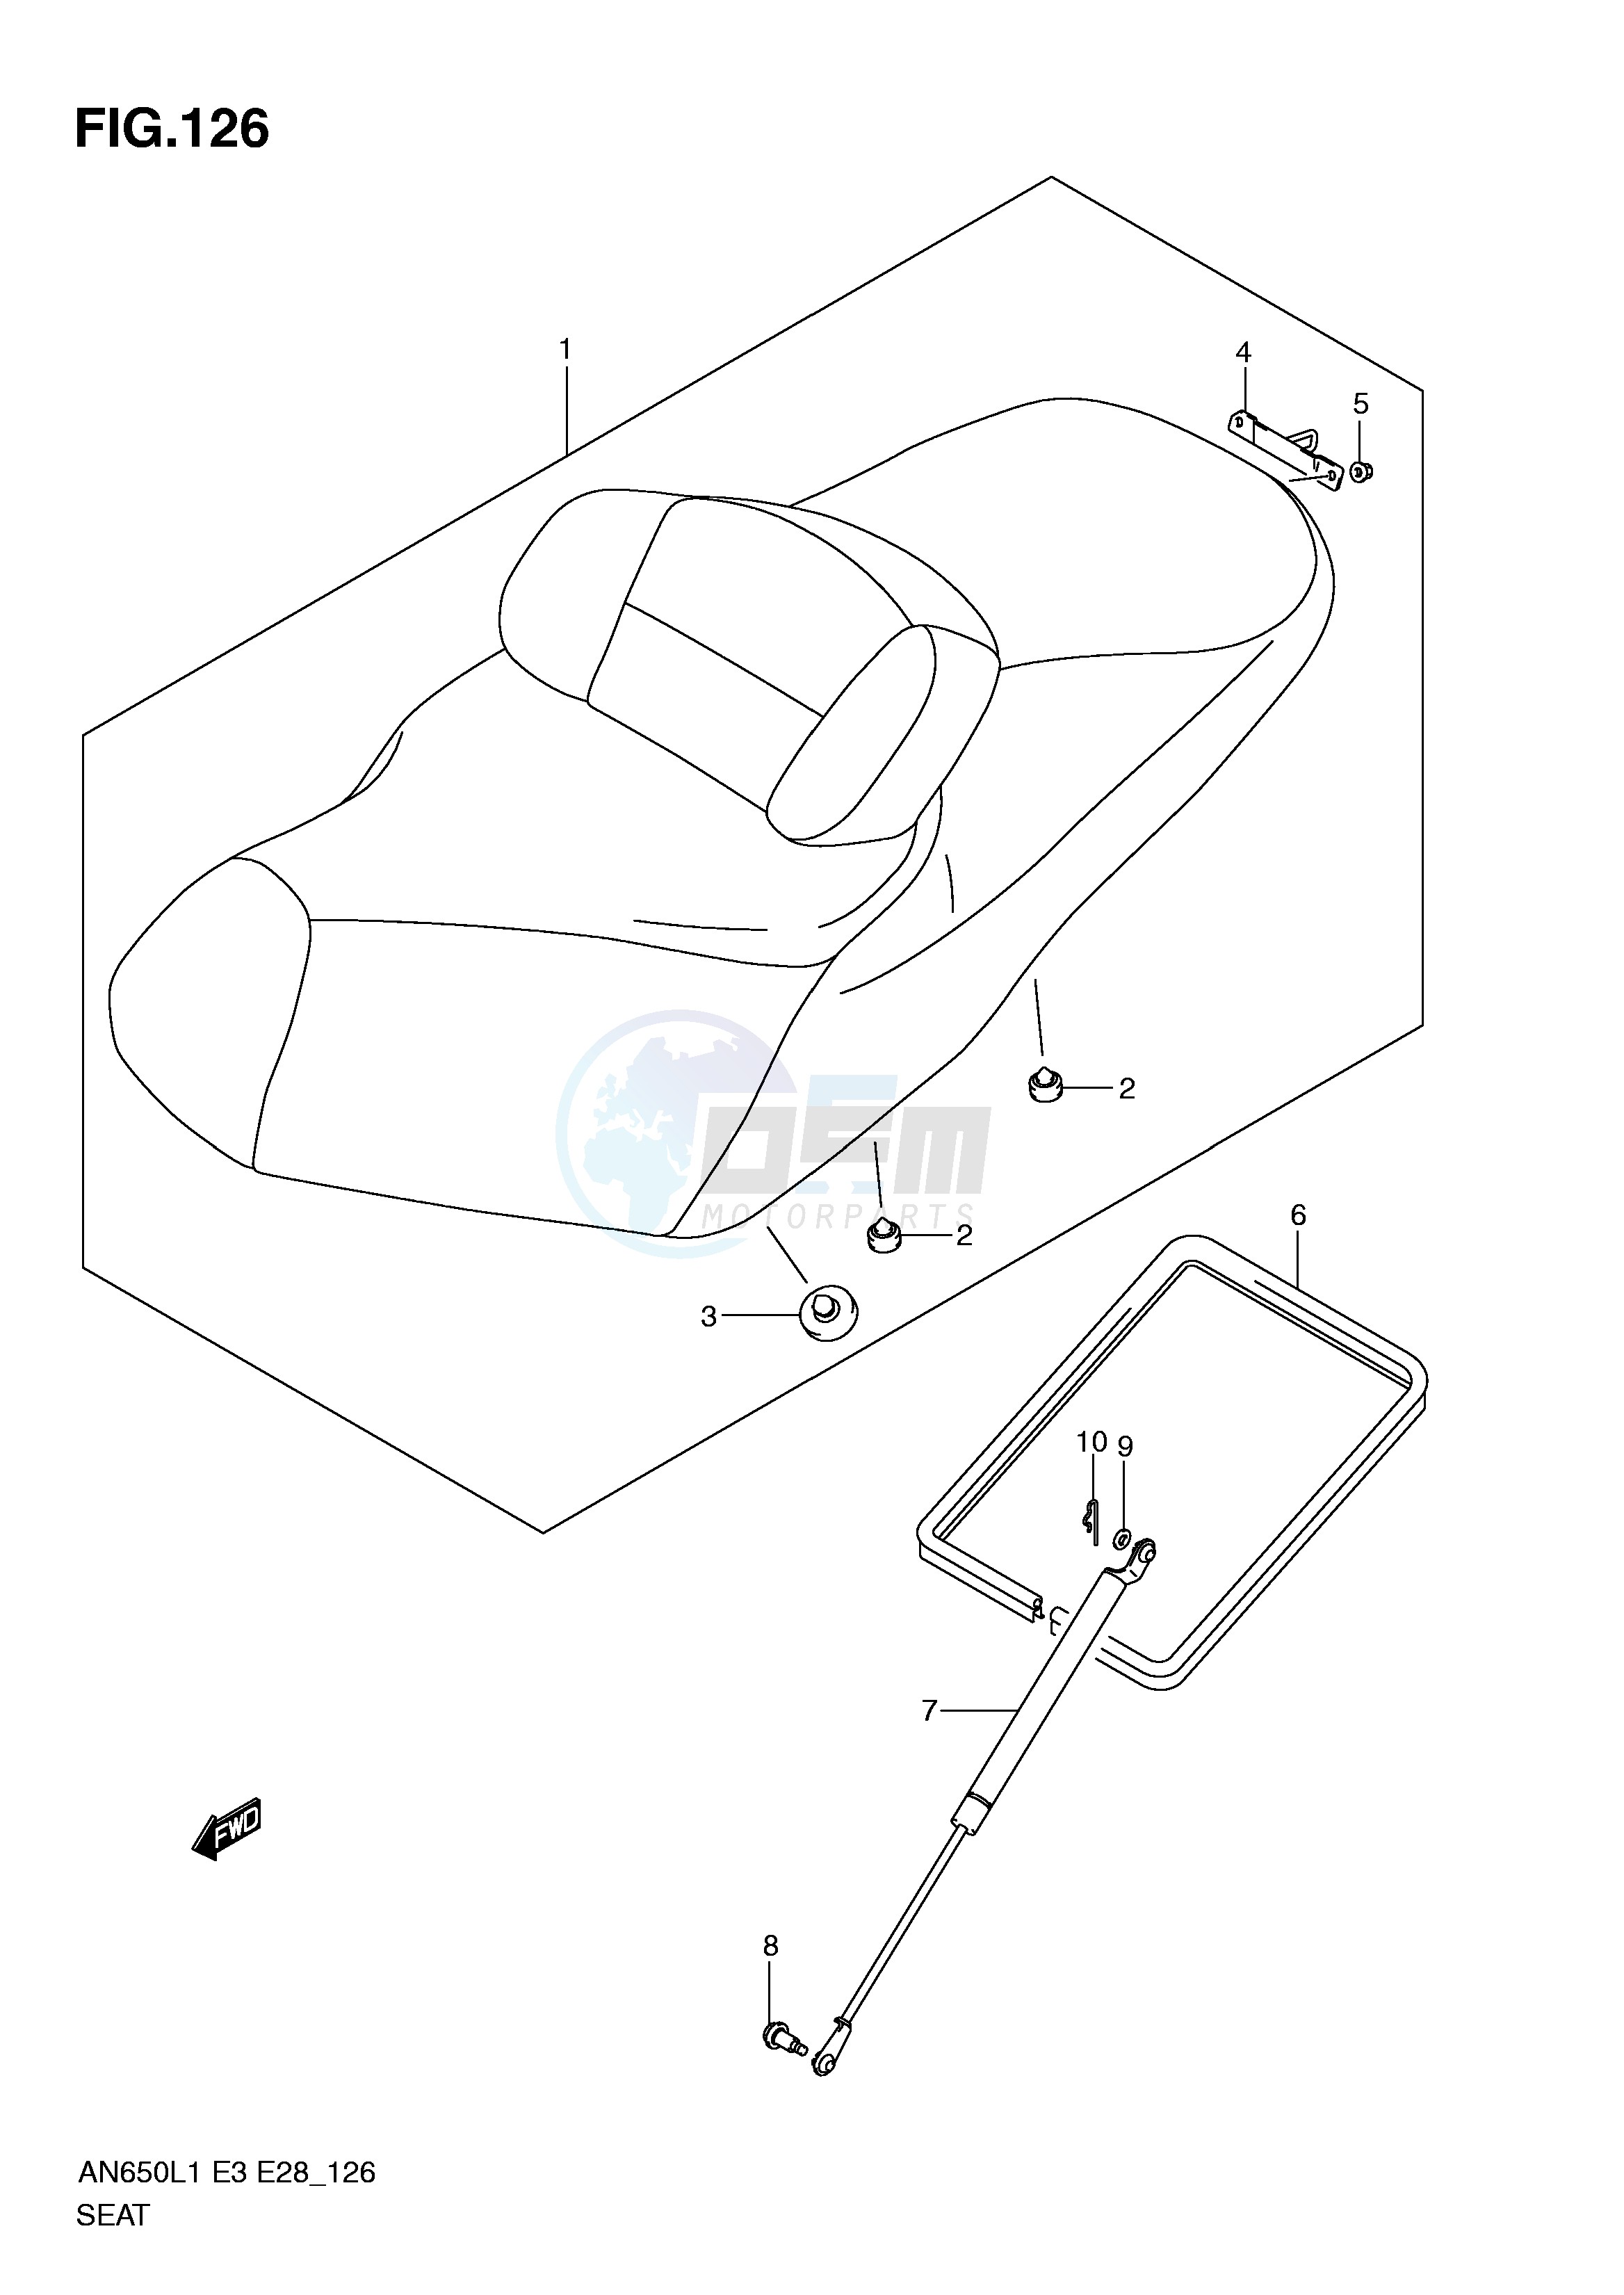 SEAT (AN650L1 E33) blueprint